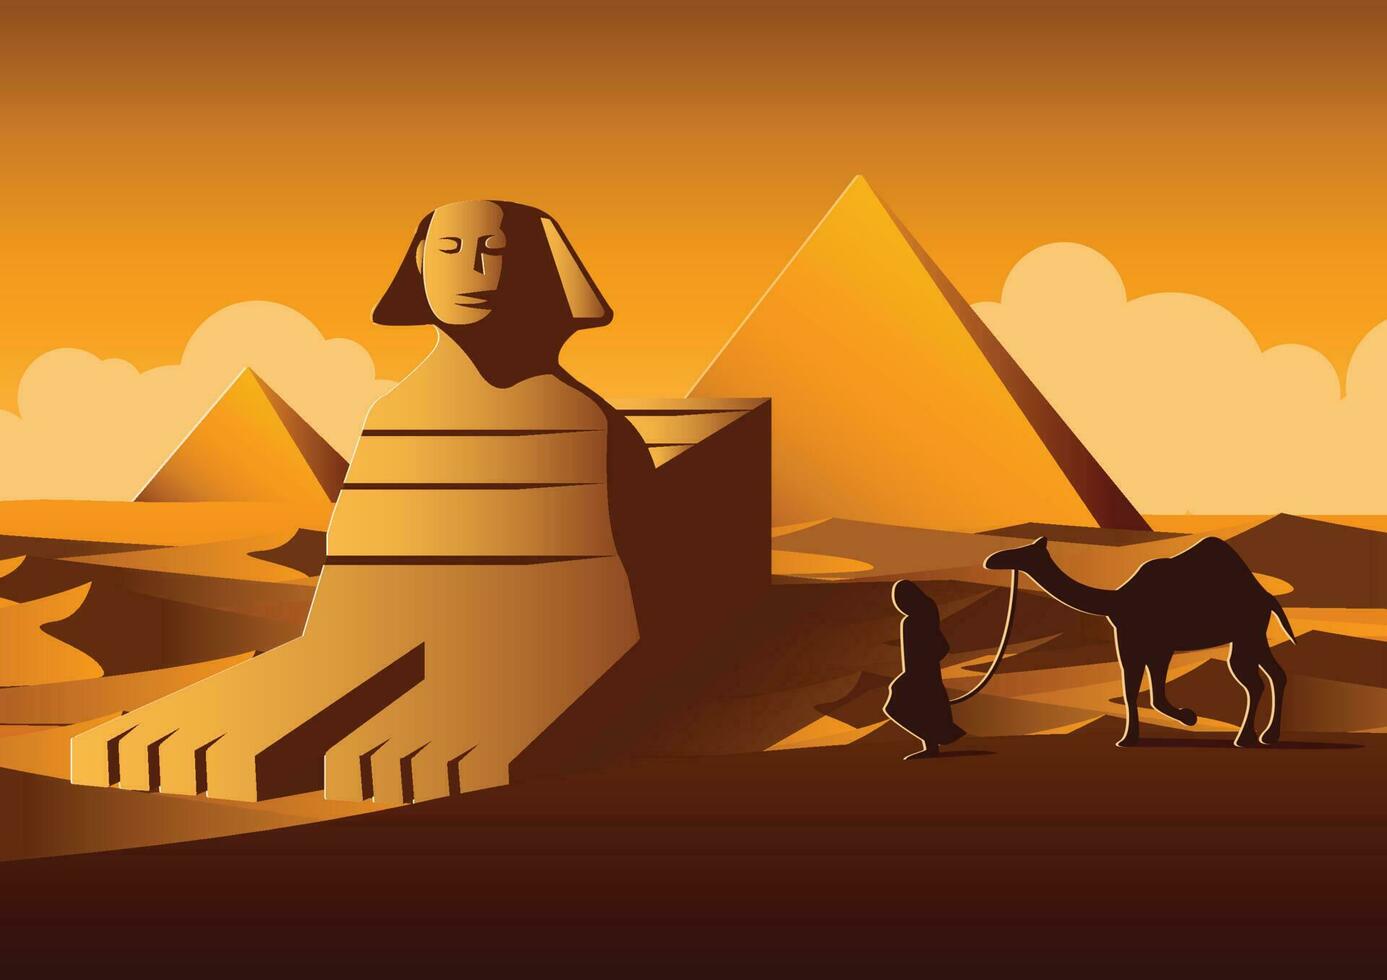 Sphinx and Pyramid famous landmark of Egypt,cartoon version,vector illustration vector